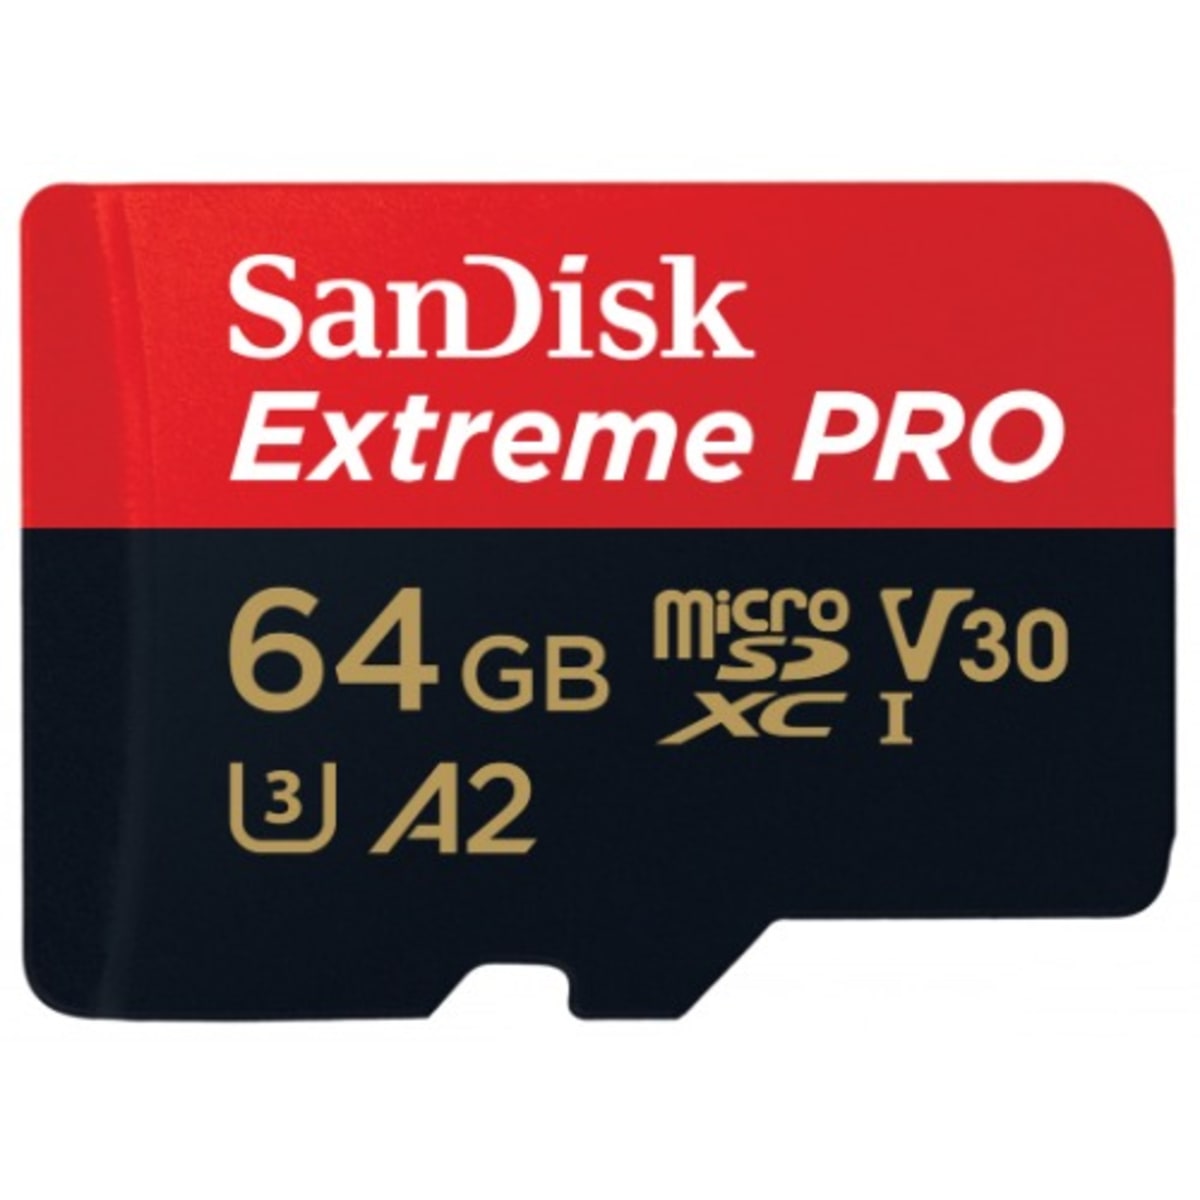 Extreme Pro 64GB XXU SanDisk 200MB/s SDXC Class 10 V30